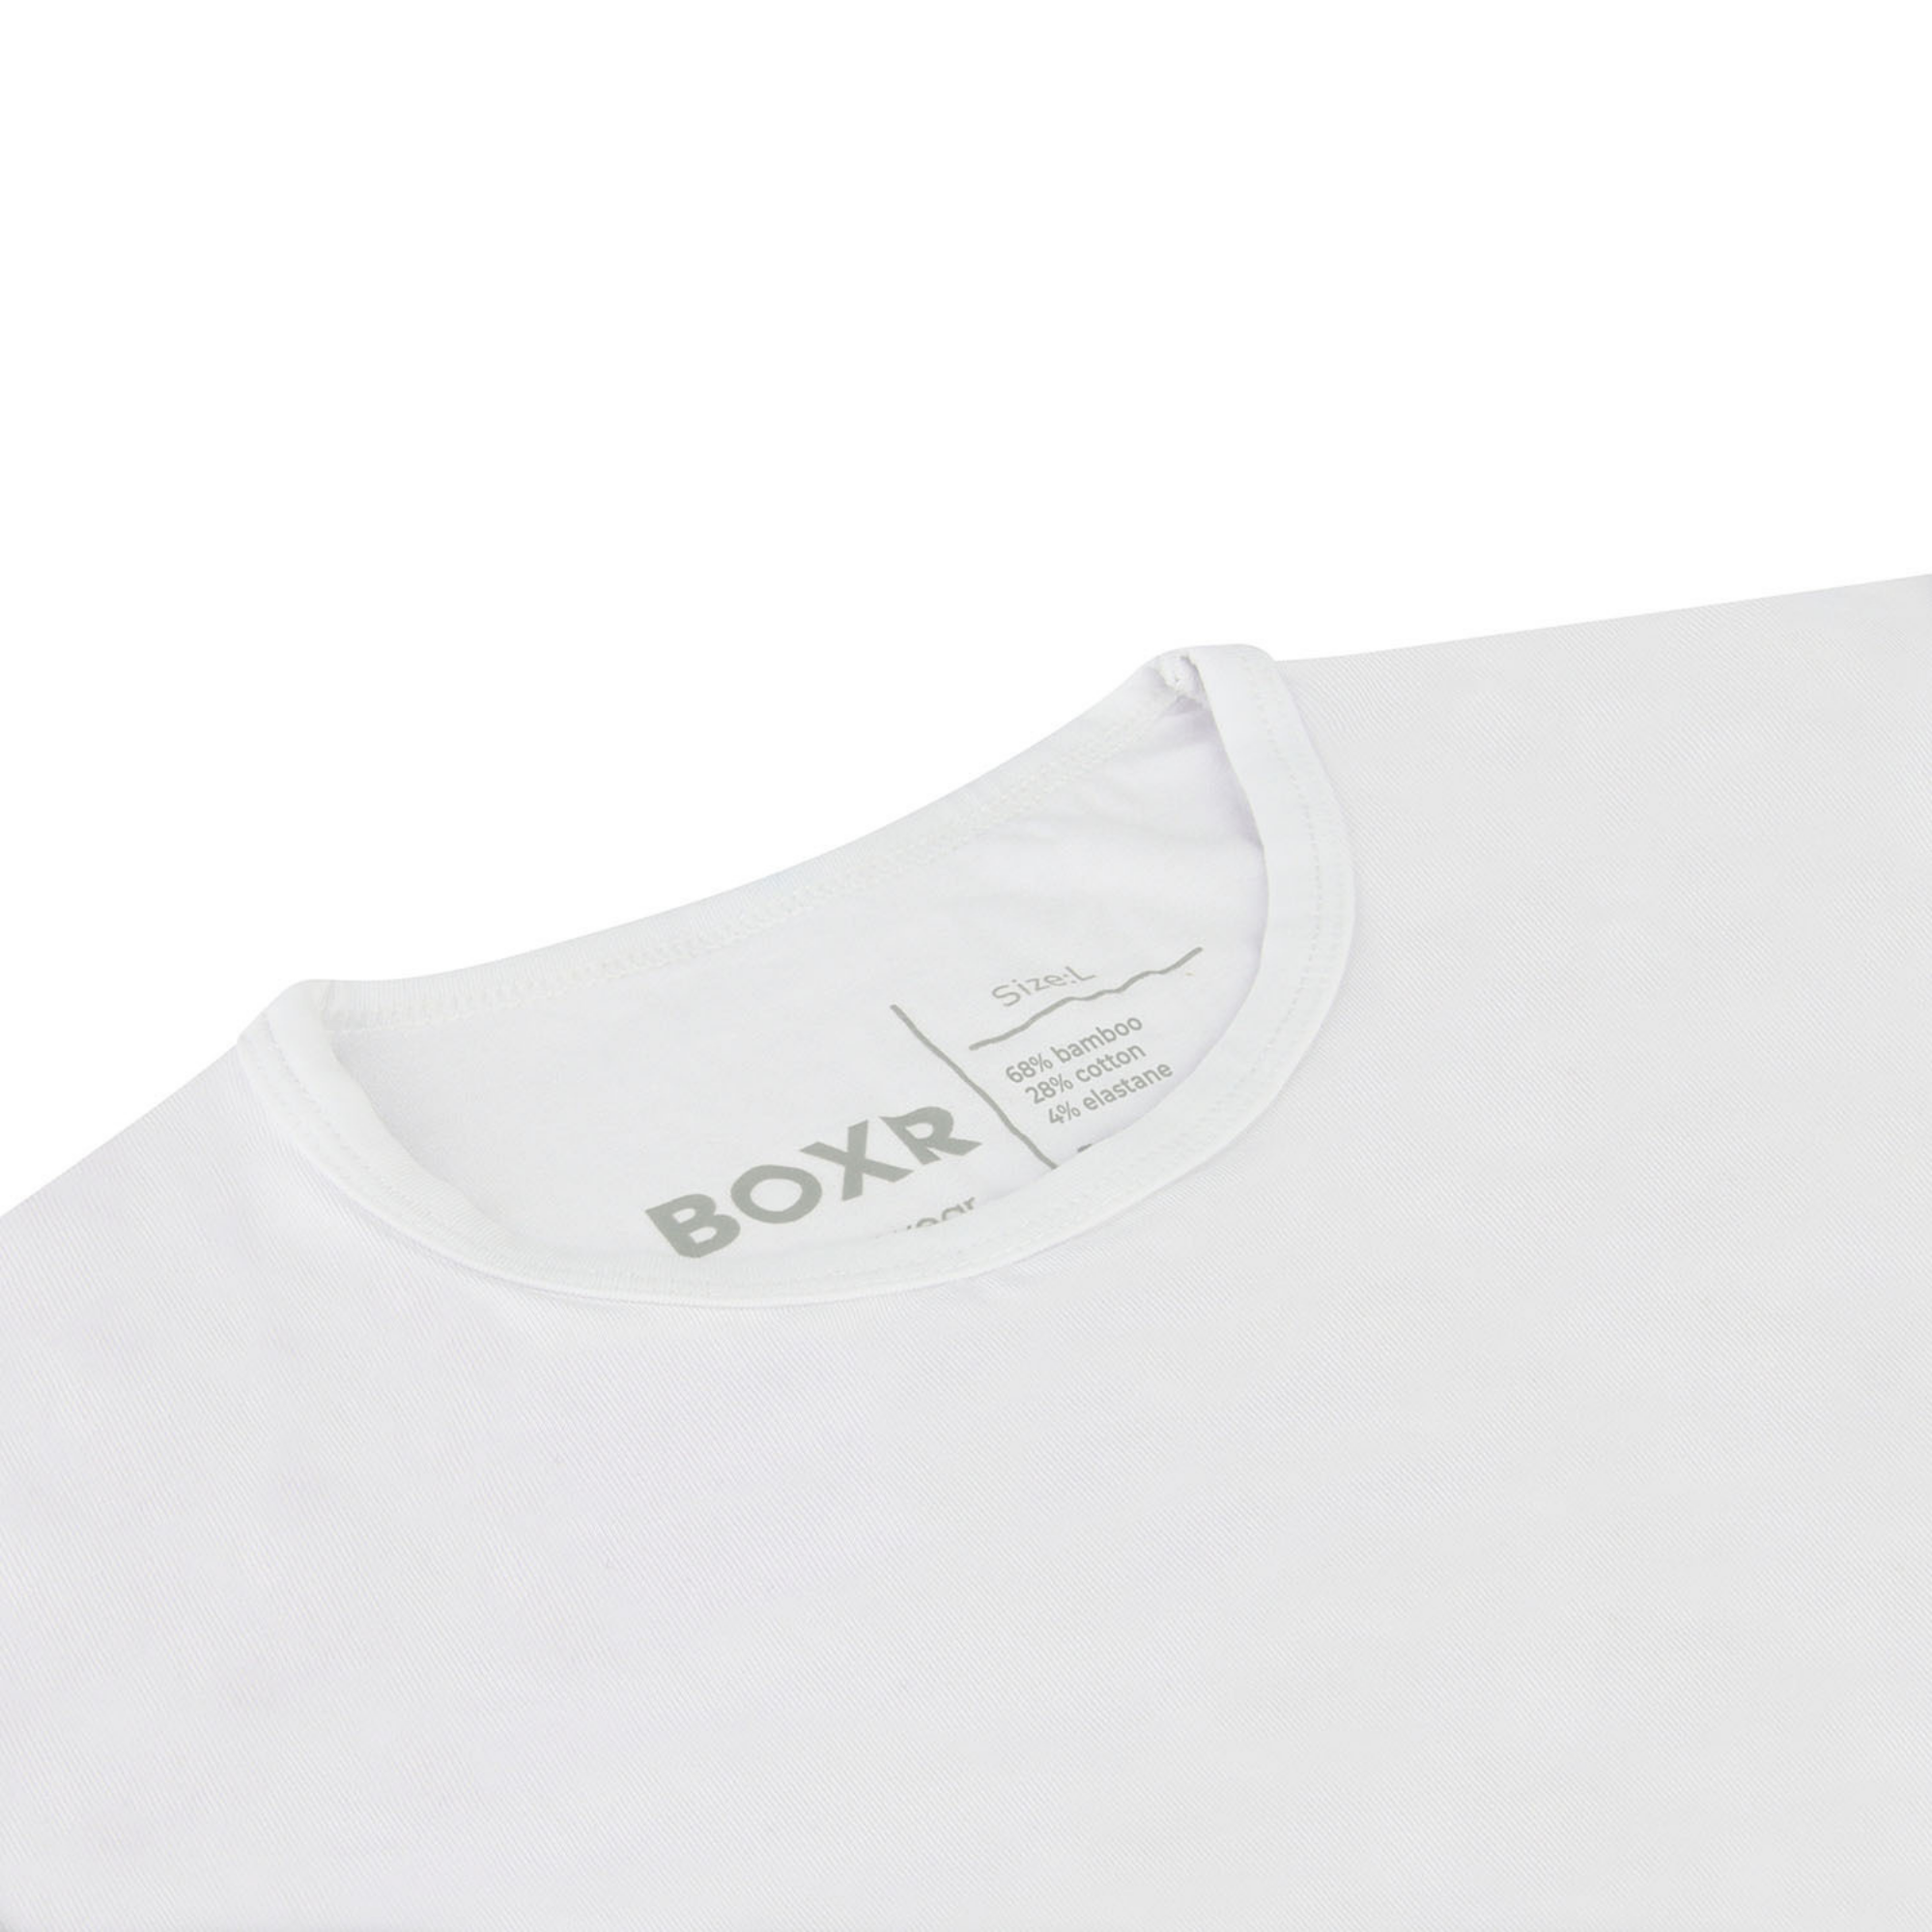 BOXR | Bamboo T-Shirt 2-Pack White